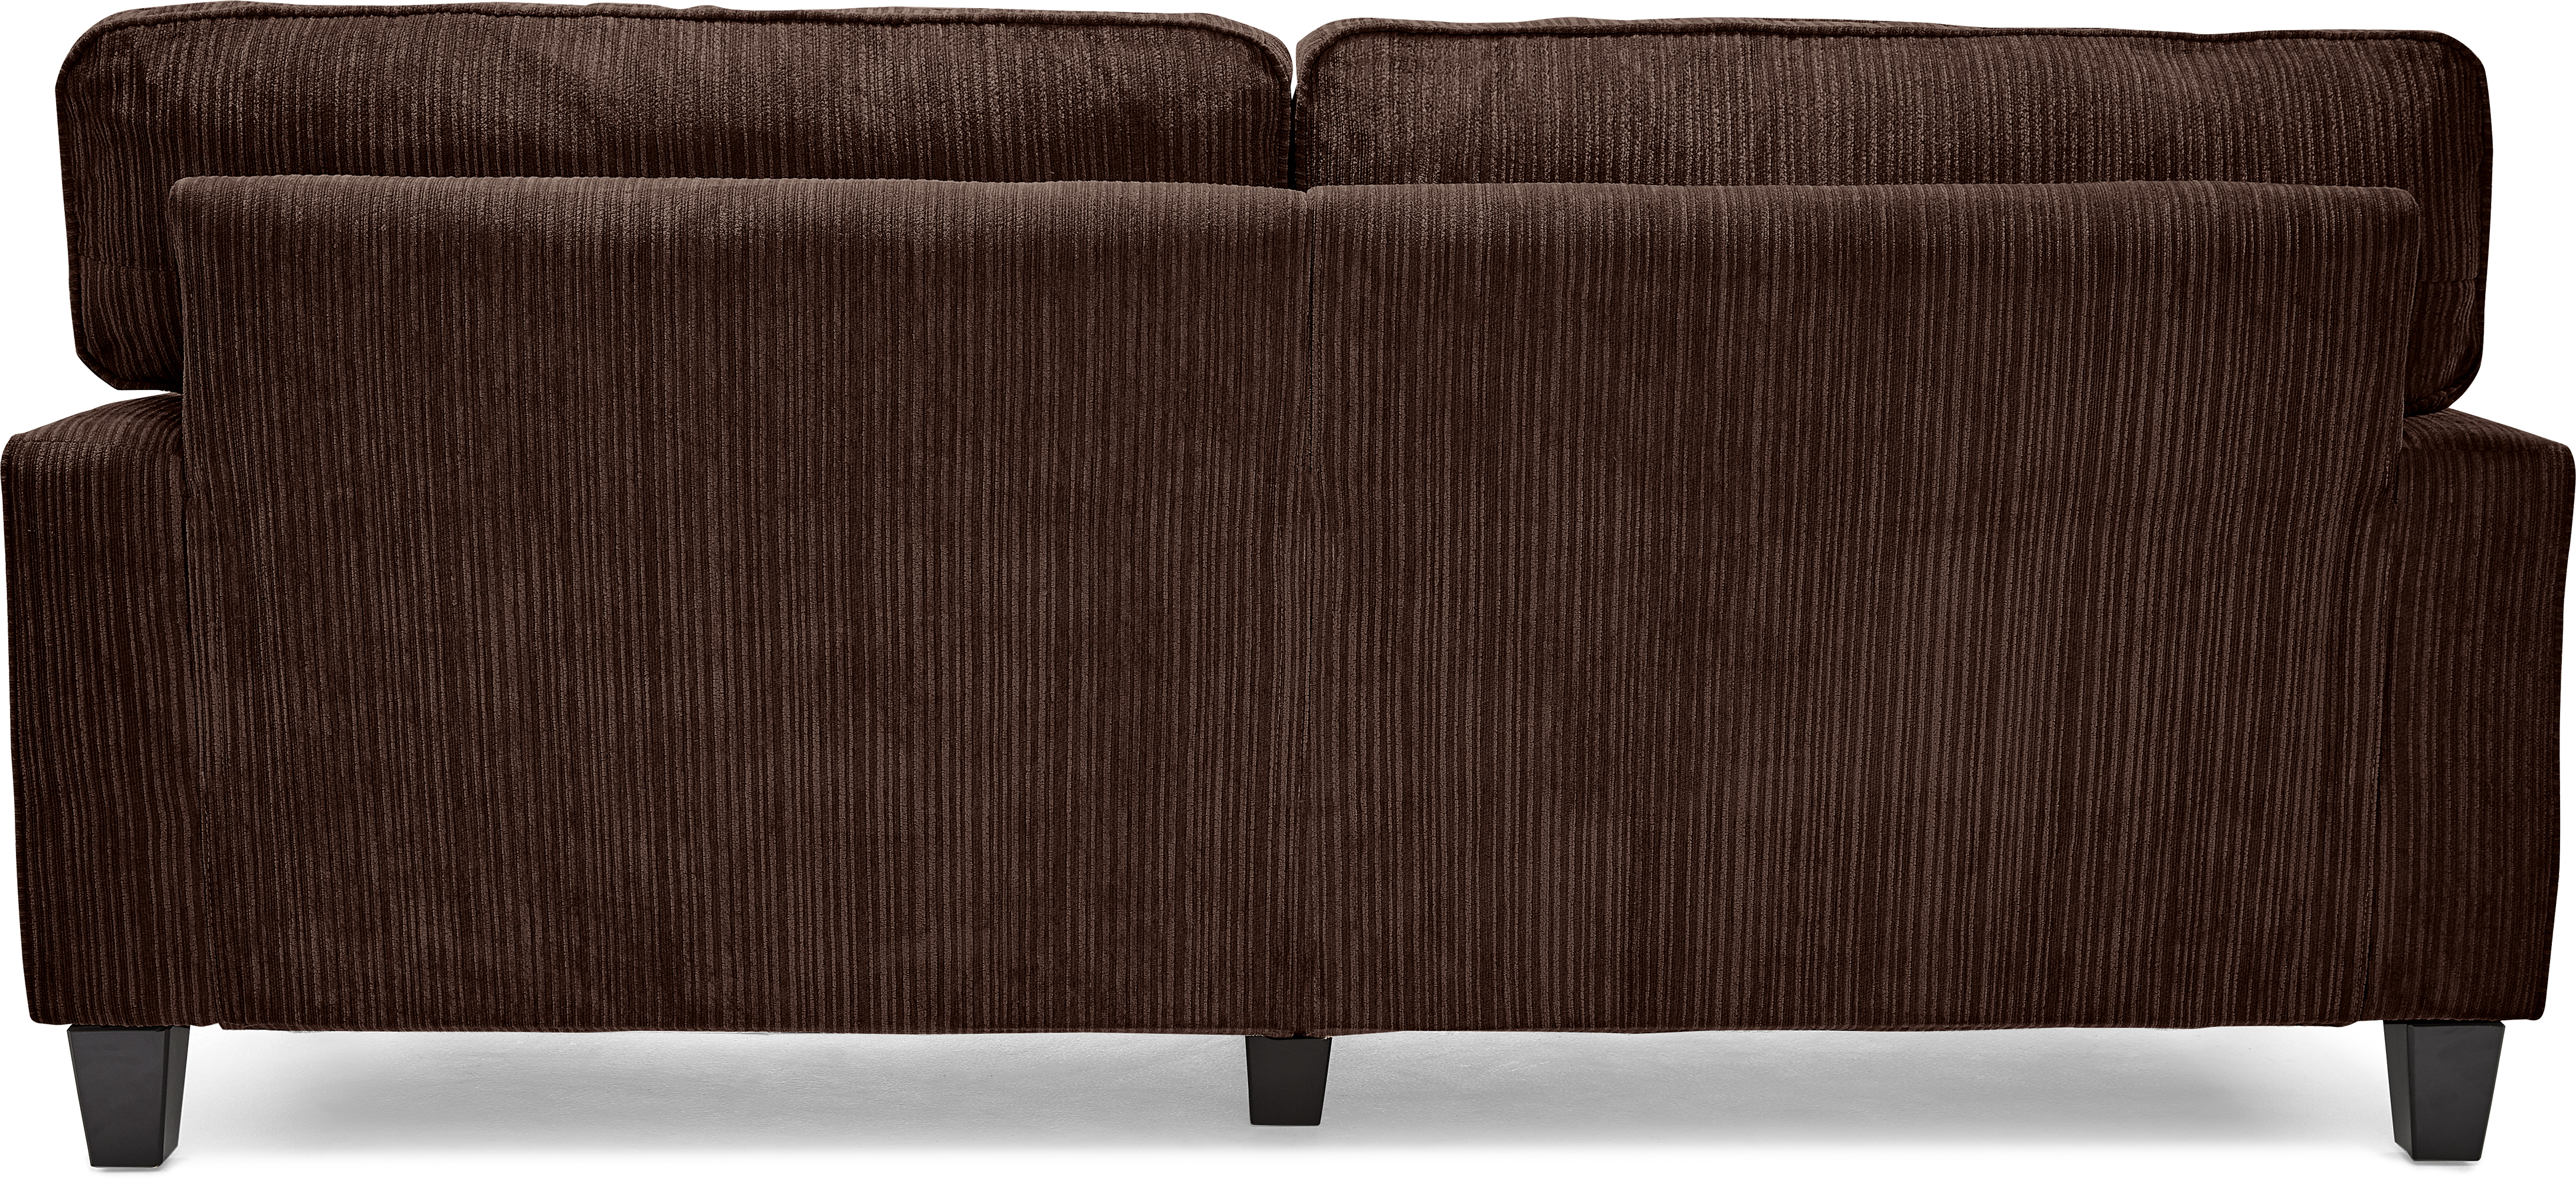 Serta RTA Palisades Collection 78" Sofa in Kingston Brown - image 5 of 12